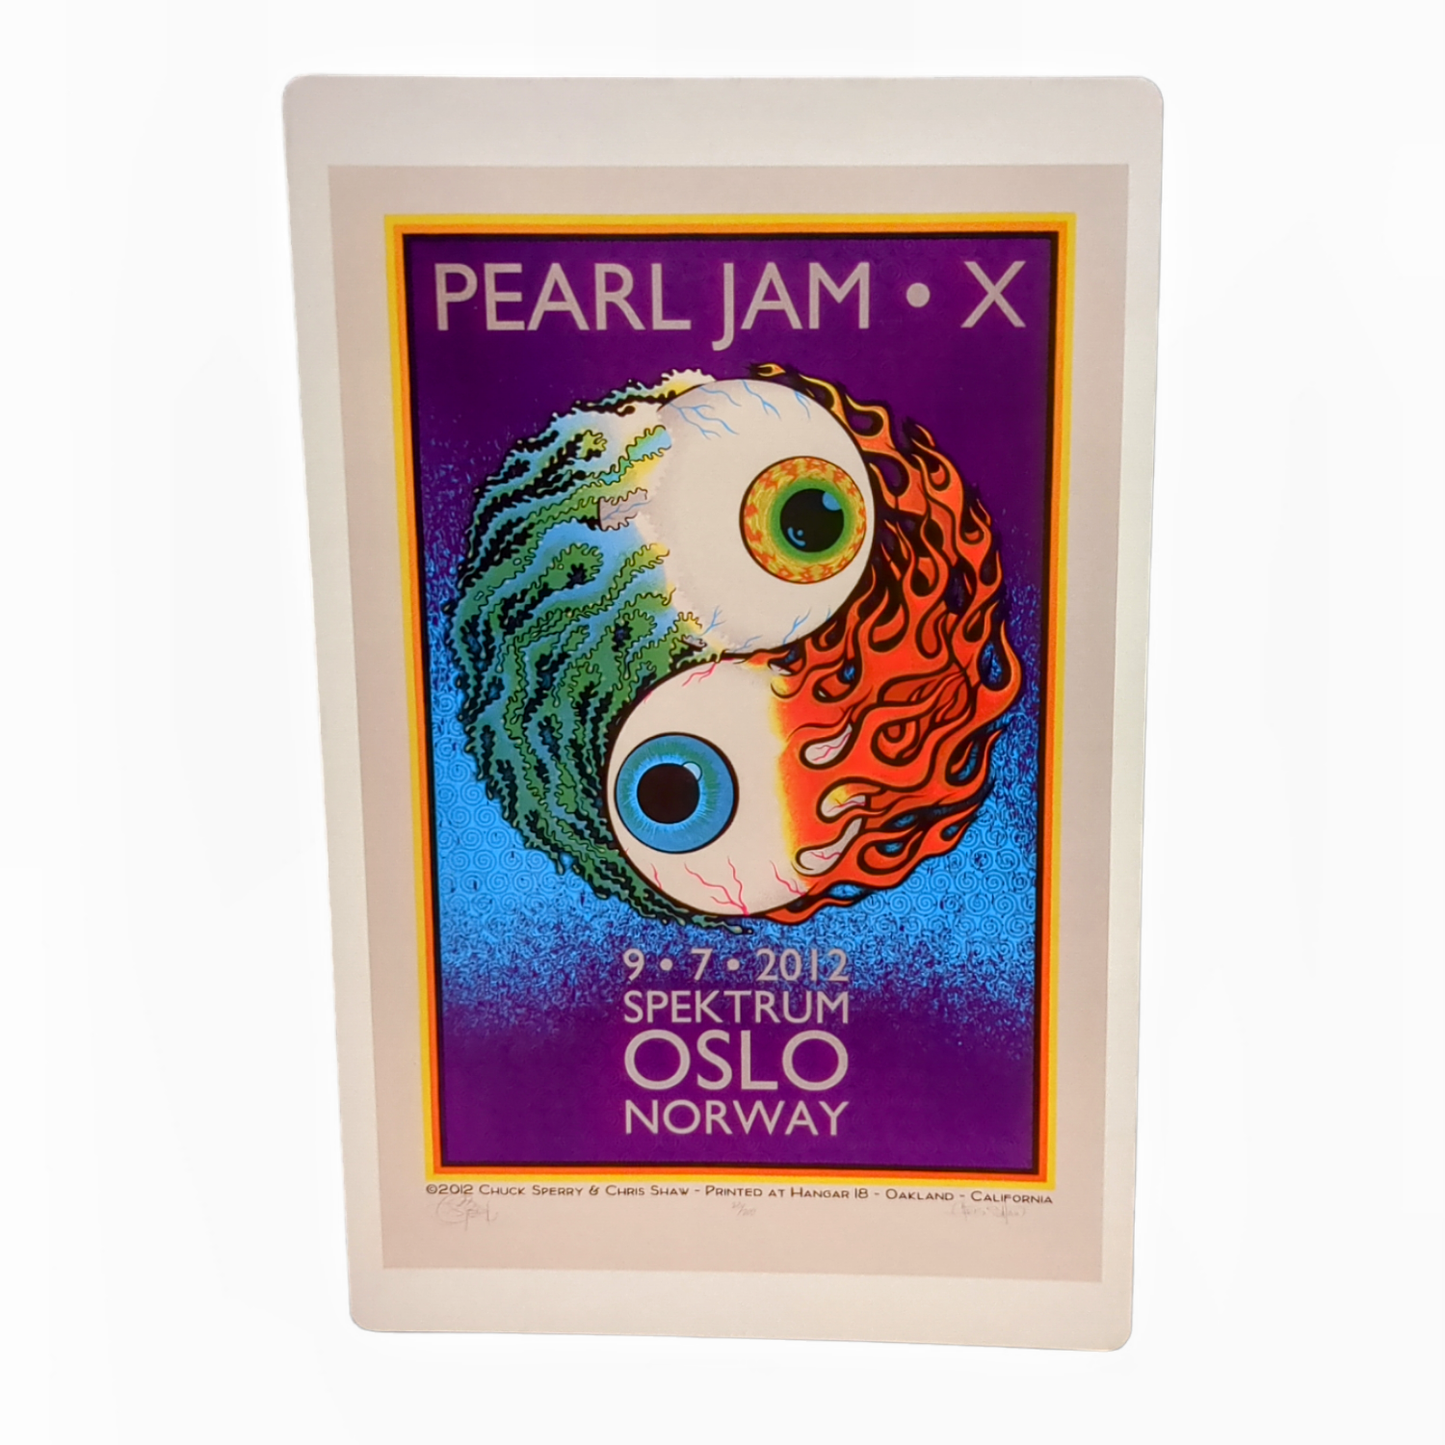 Chuck Sperry Pearl Jam Spektrum Oslo, Norway 2012 Art Card Approx. 8.5 x 5.5 in